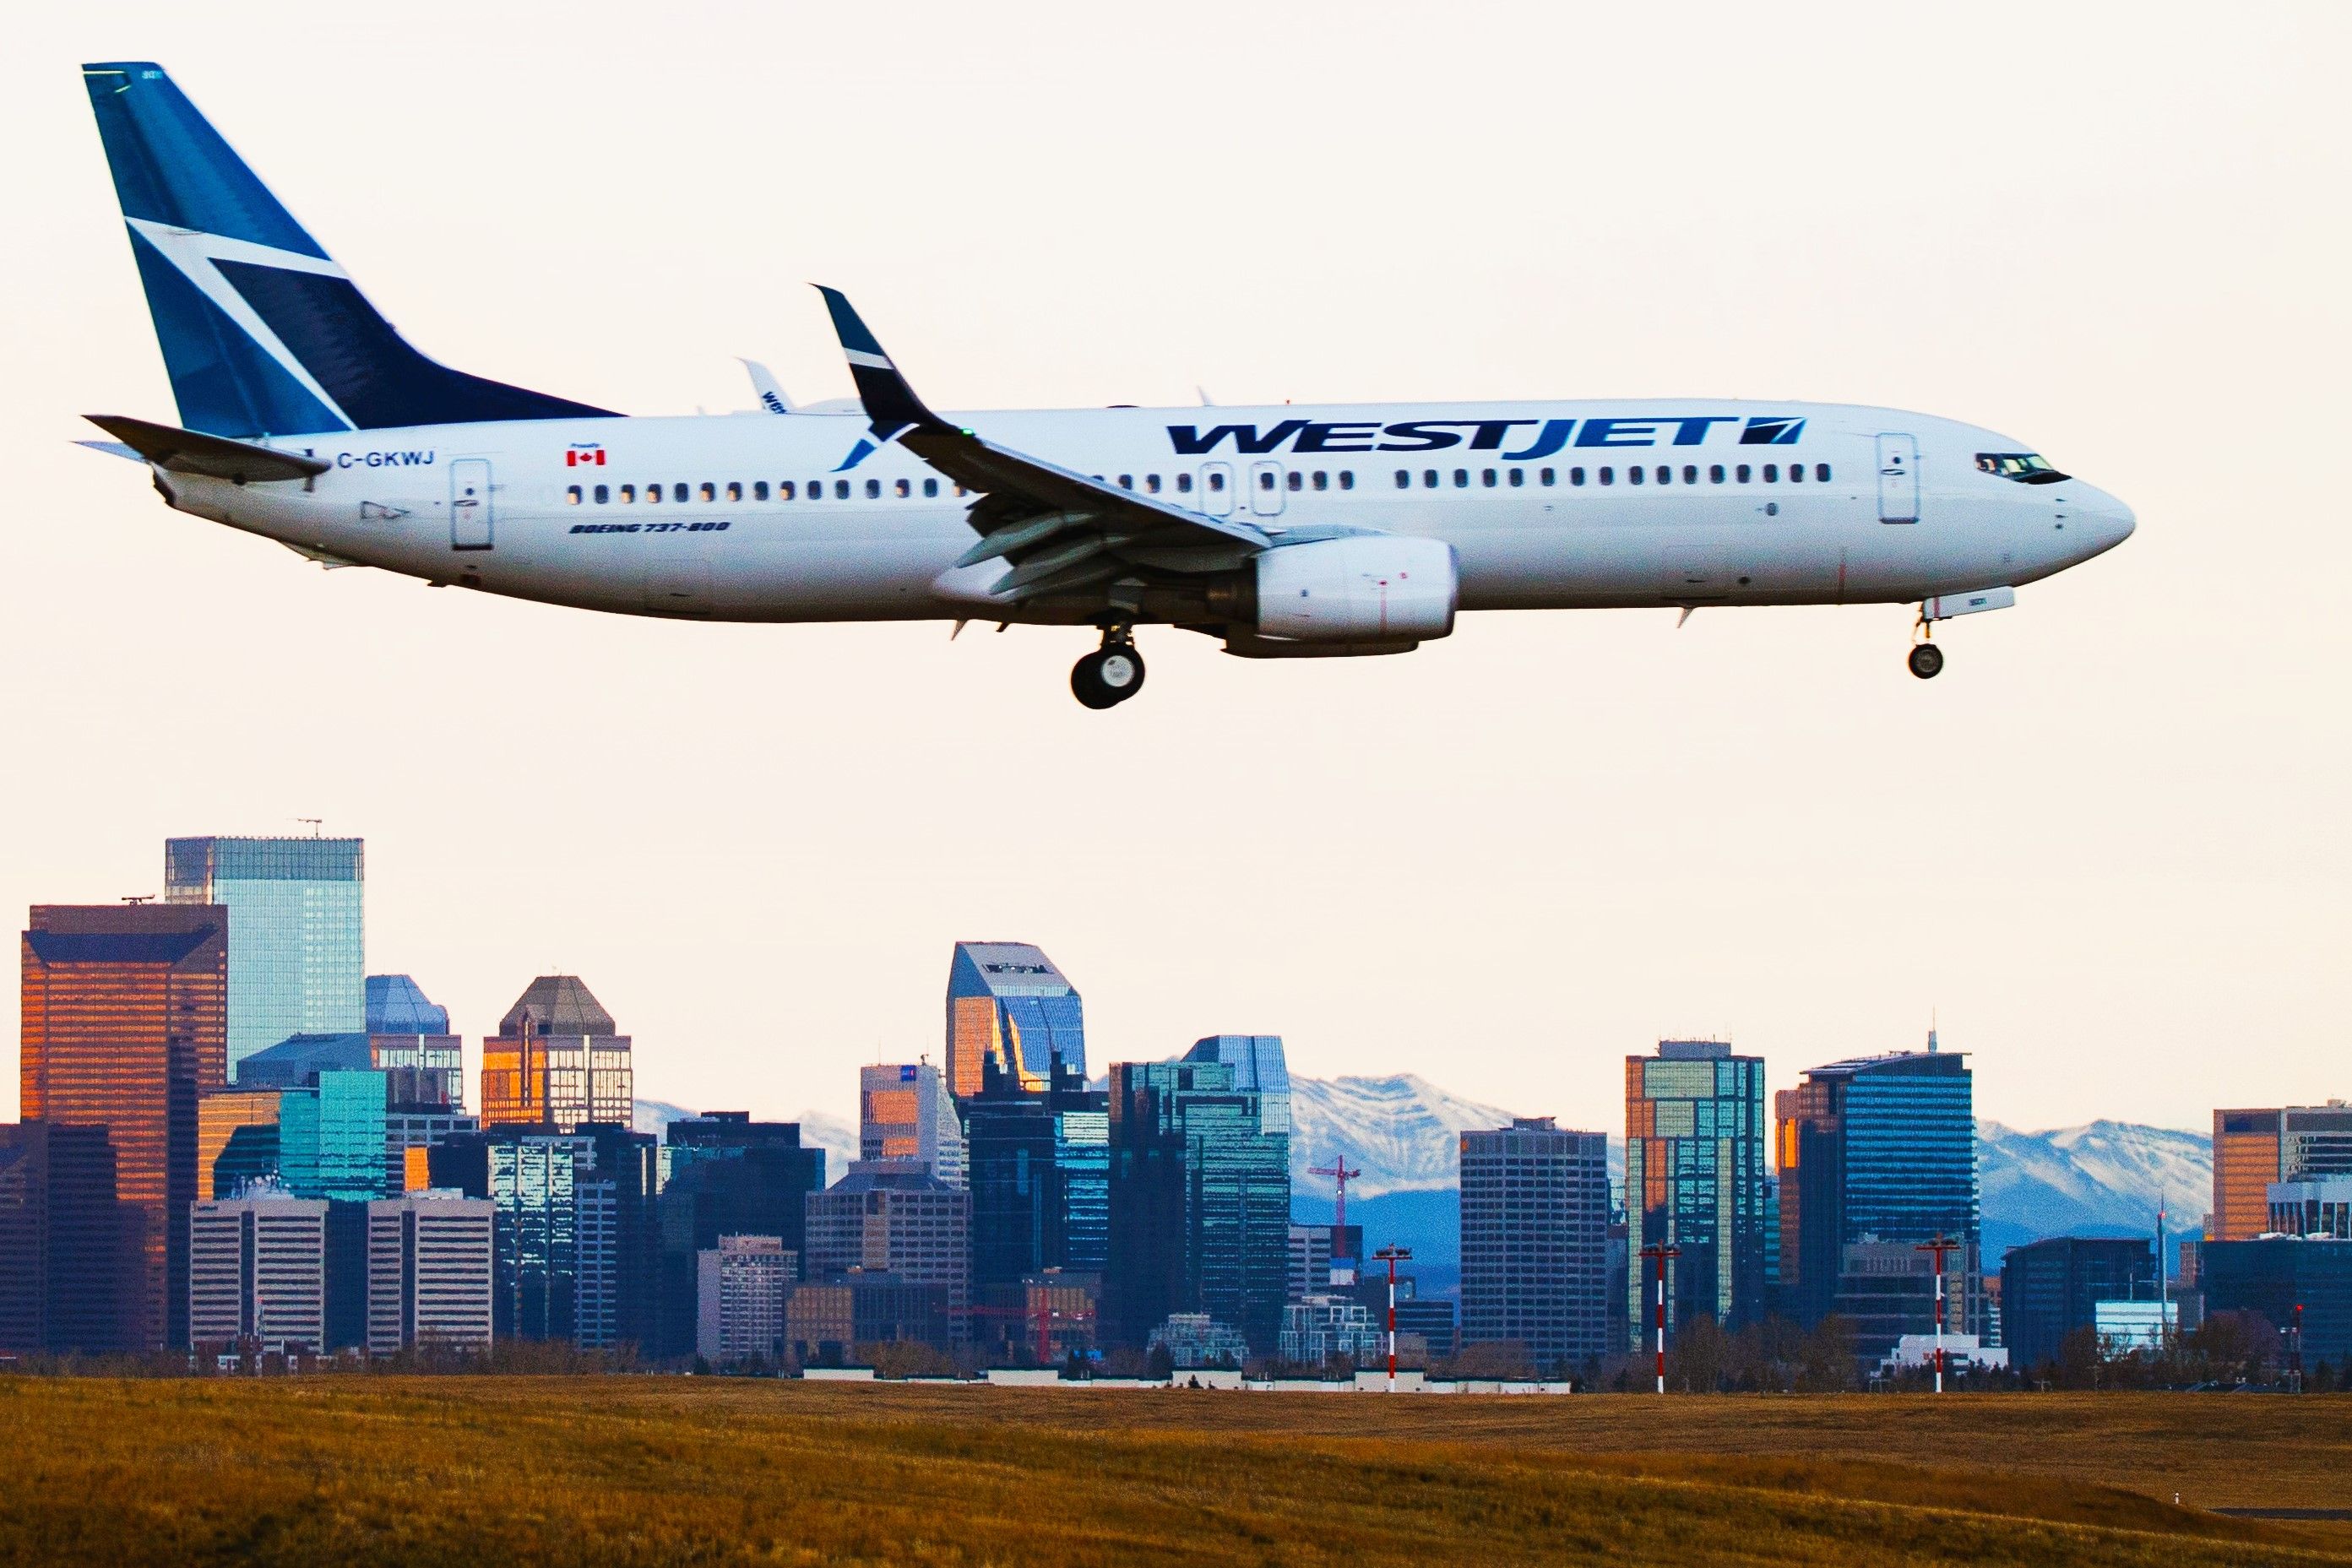 shutterstock_1055754497 - 4x6 - CALGARY, CANADA - OCTOBER 24, 2017: WestJet Airlines C-GKWJ Boeing 737-800 landing over the city skyline at Calgary International Airport.